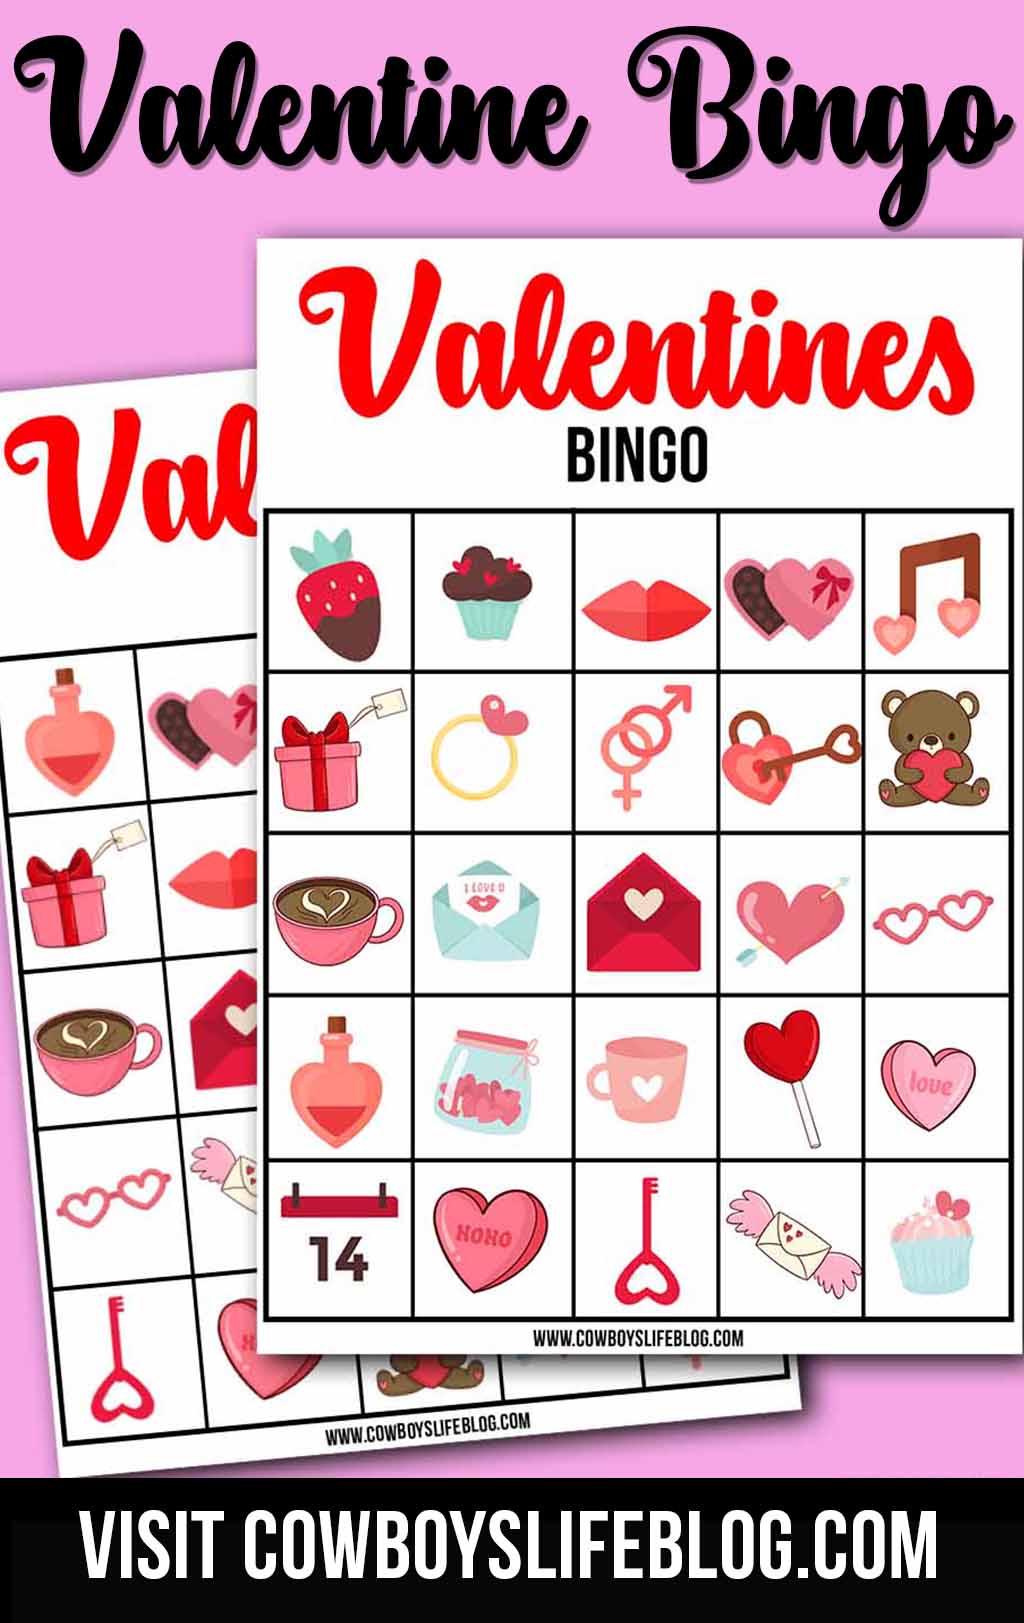 Printable Valentine's Day Bingo Cards